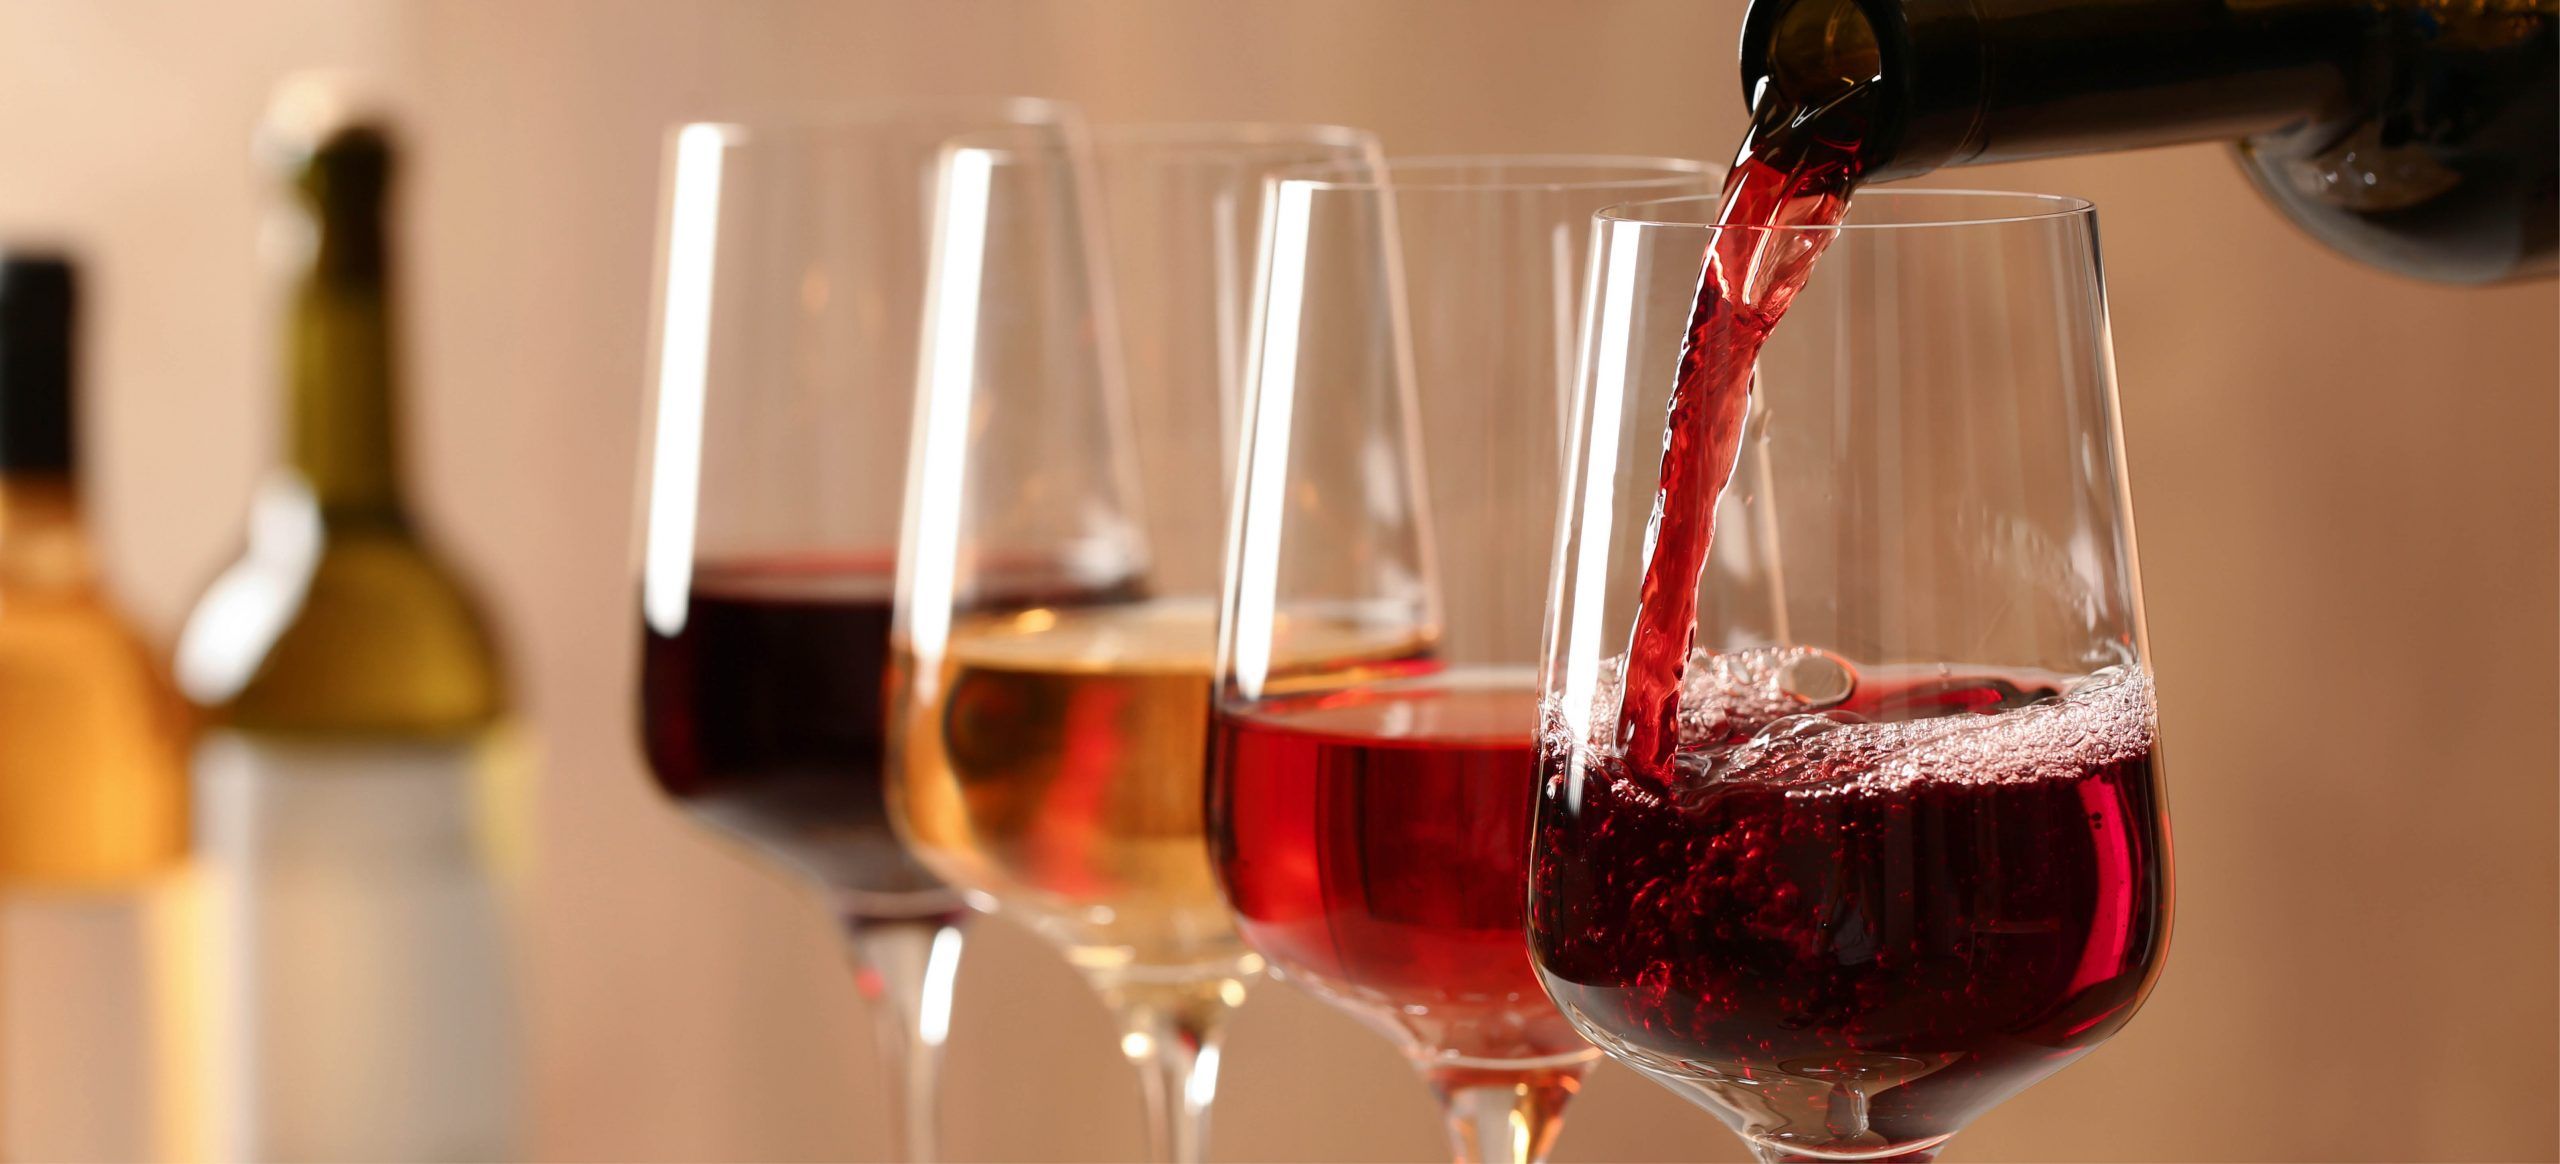 Prevent the formation of tartrate crystals in wine bottles - Enartis